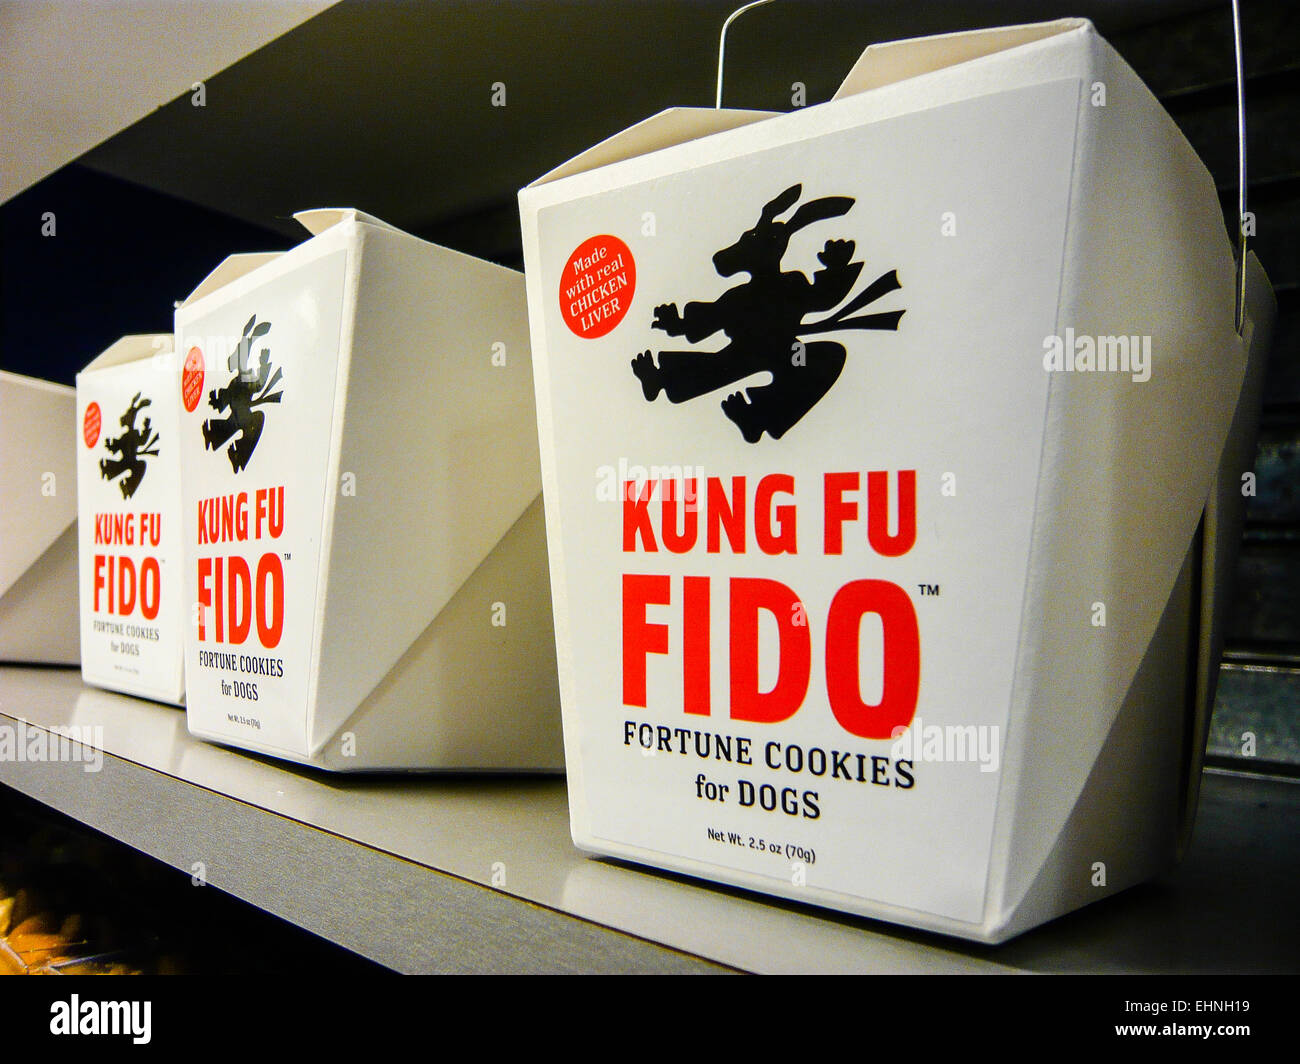 Kung Fu fortune cookies pour chiens Fido Banque D'Images